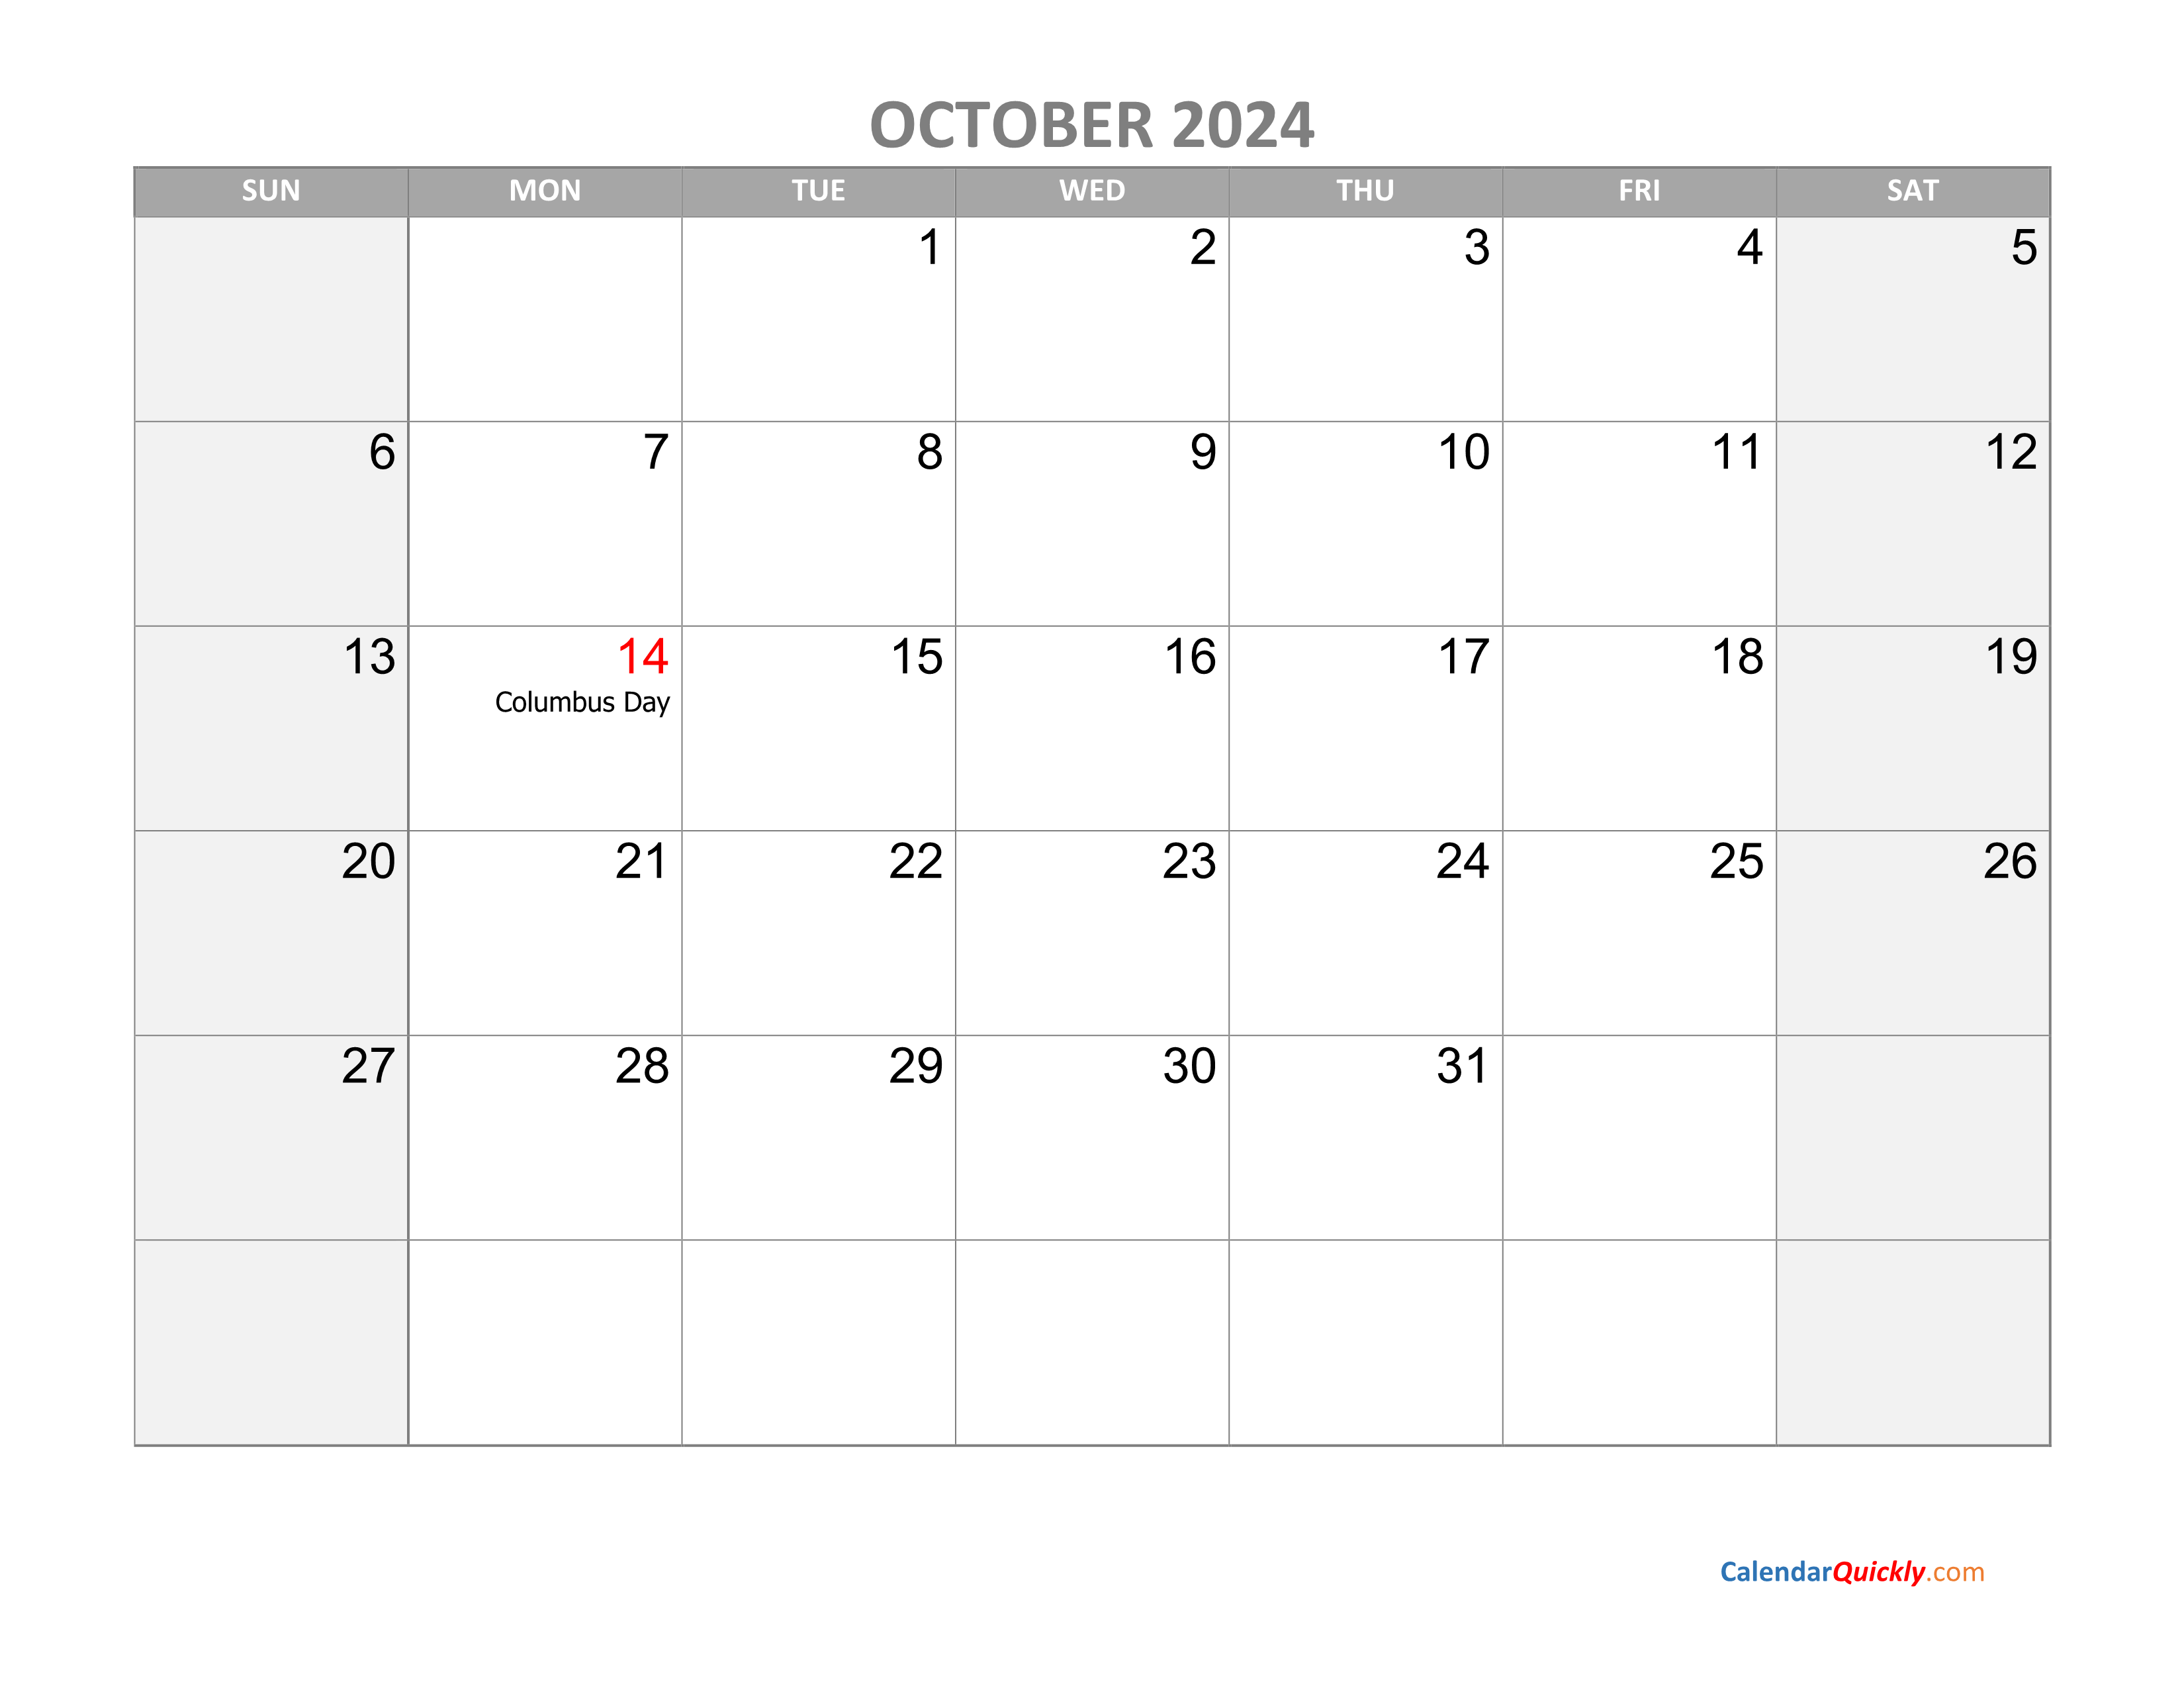 October Calendar 2024 with Holidays Calendar Quickly